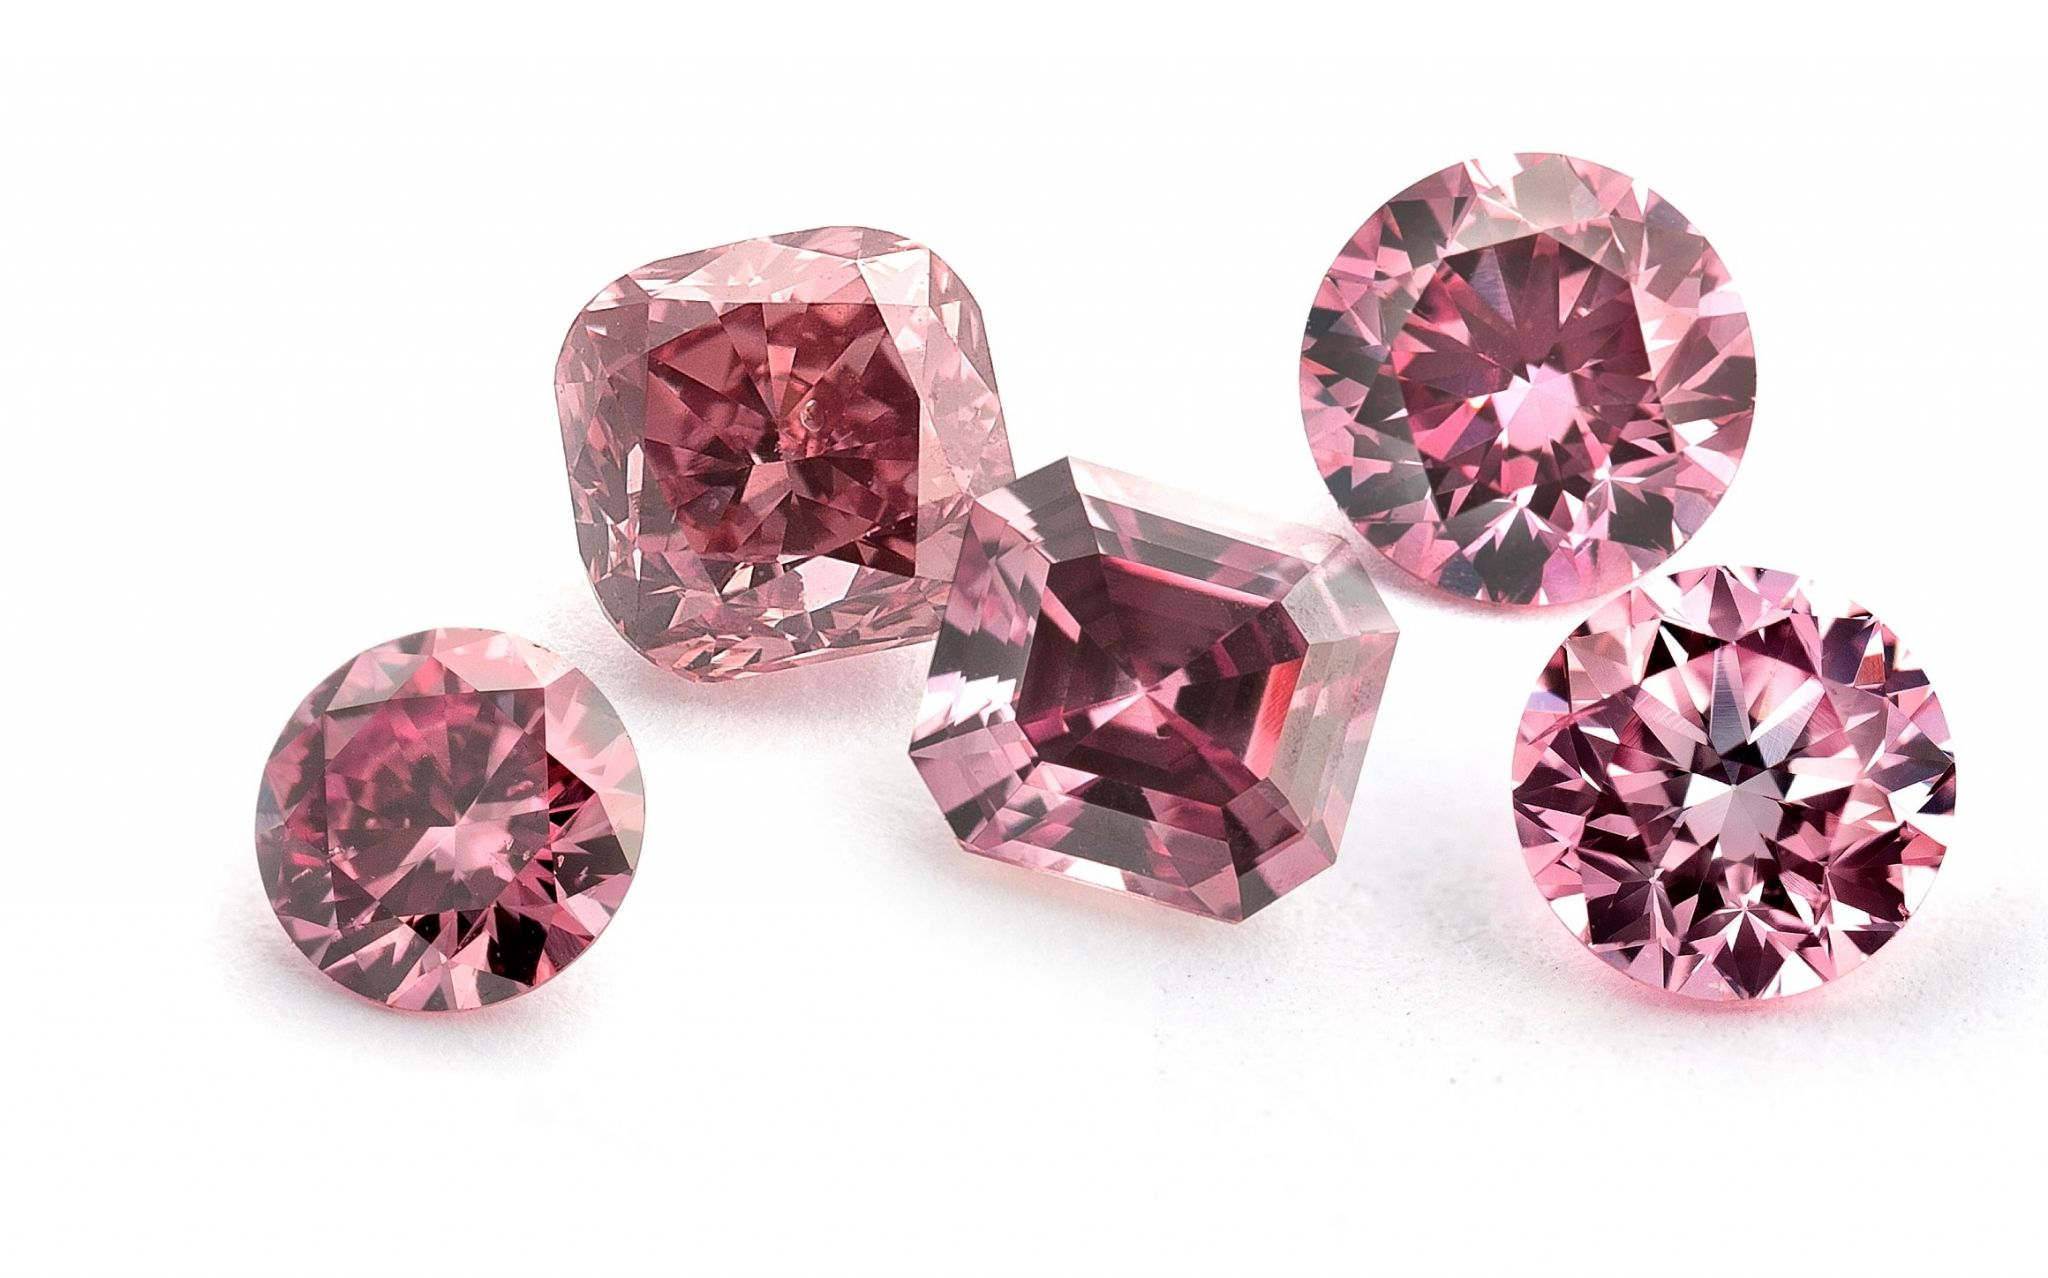 2048x1278 pink hd wallpapers 1080p windows | Pink diamond, Pink diamond jewelry, Argyle diamonds